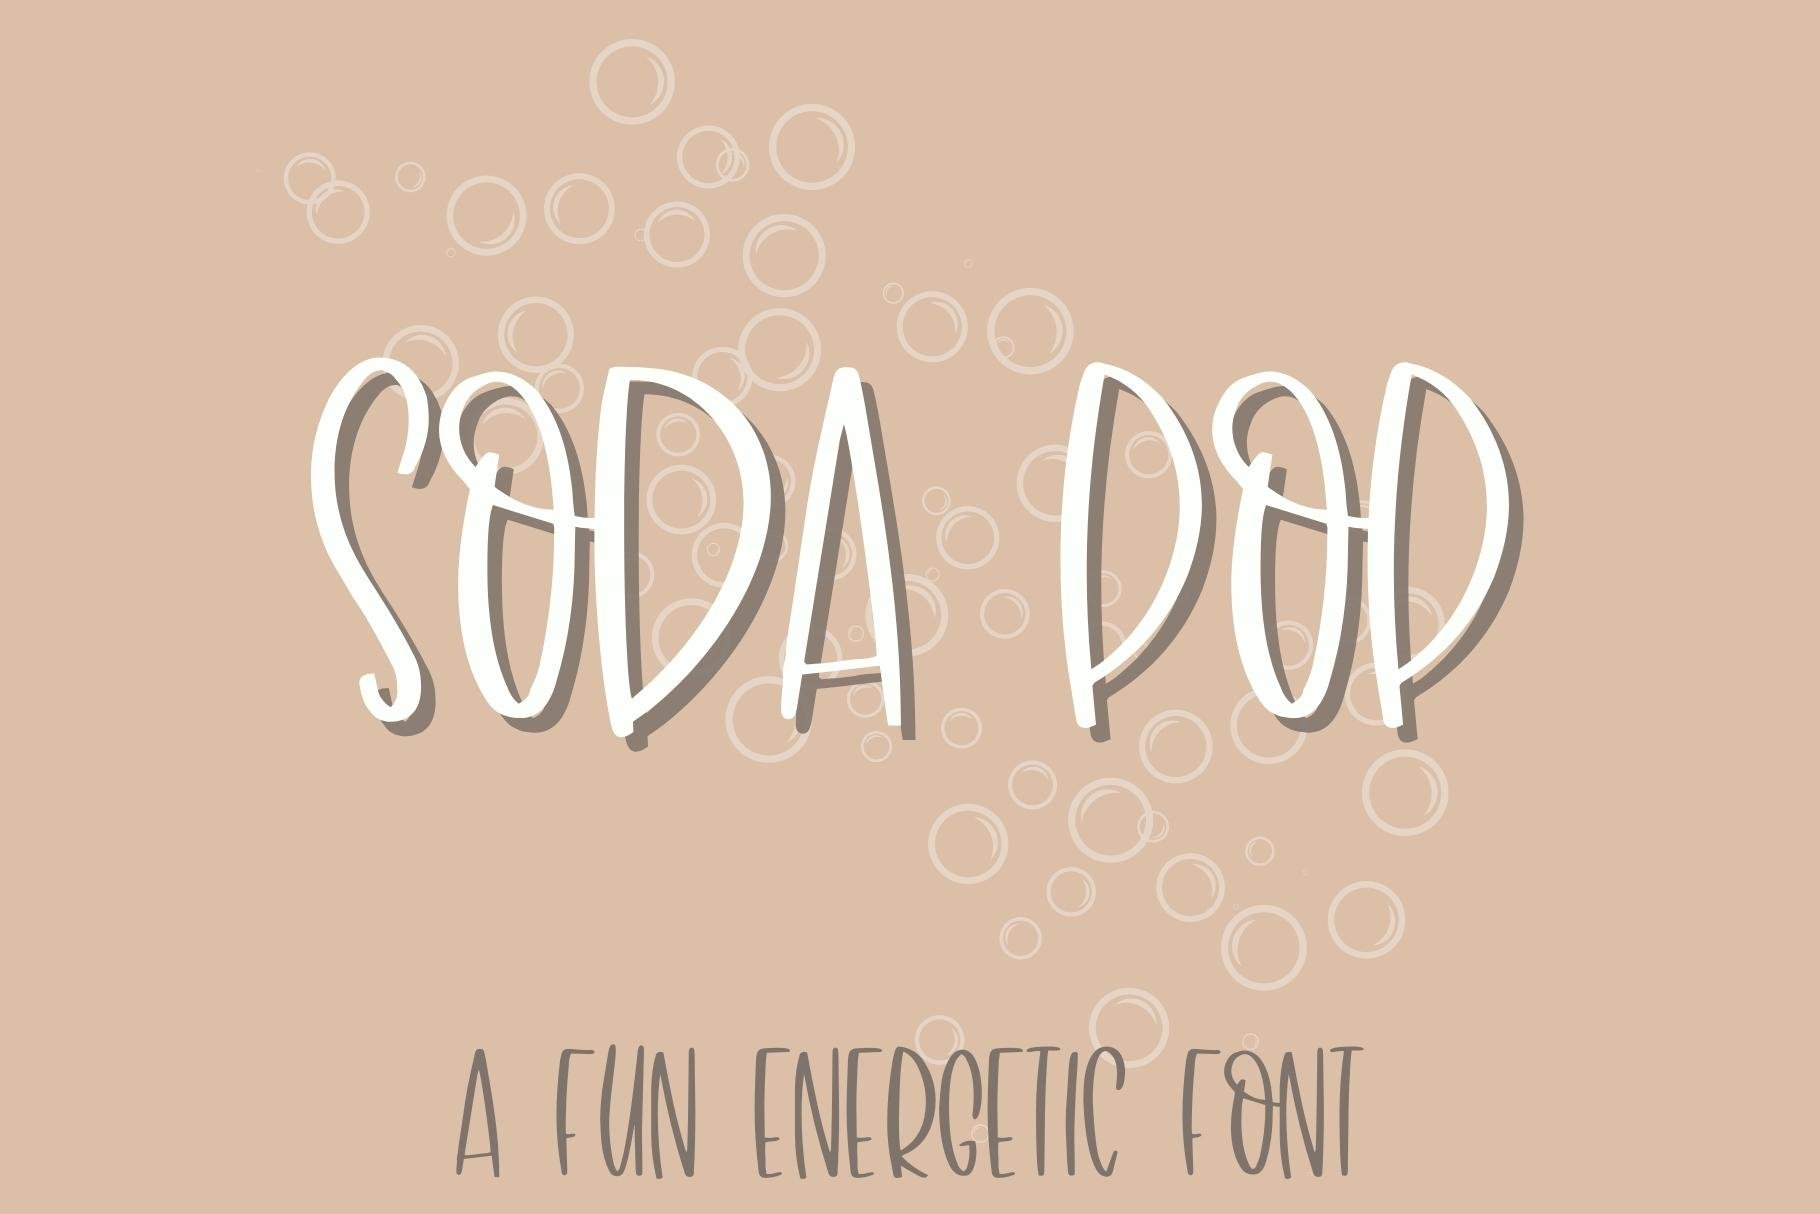 Soda Pop, Fun Handwritten Font cover image.